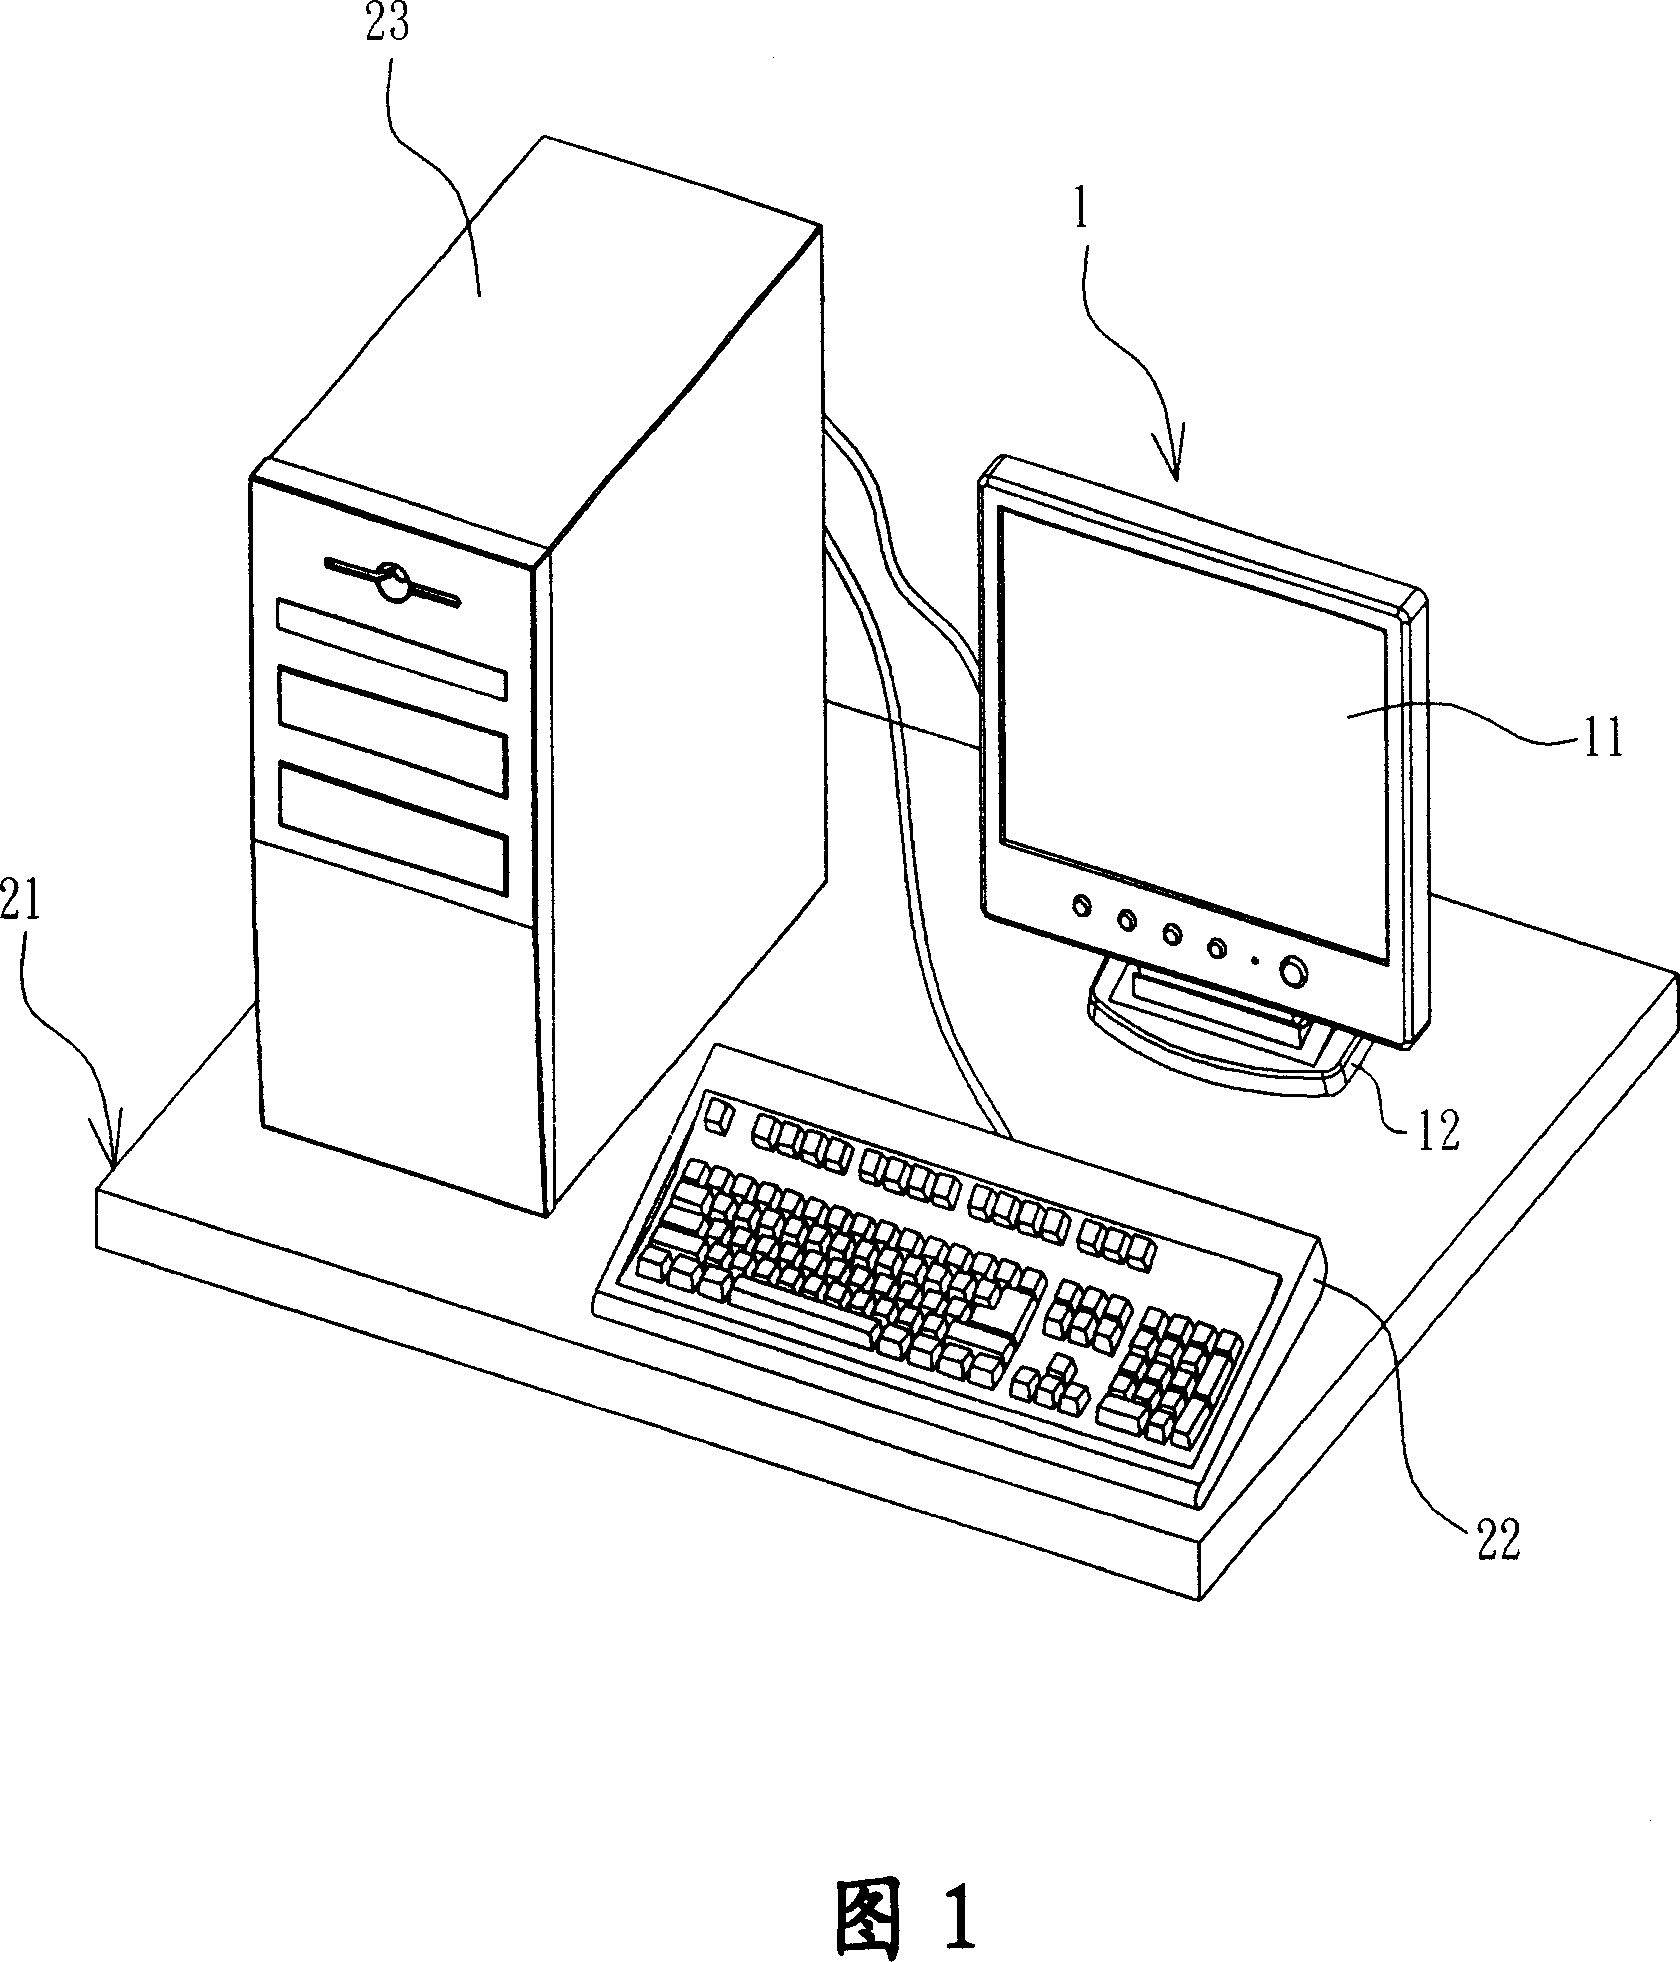 Desk top liquid crystal display device